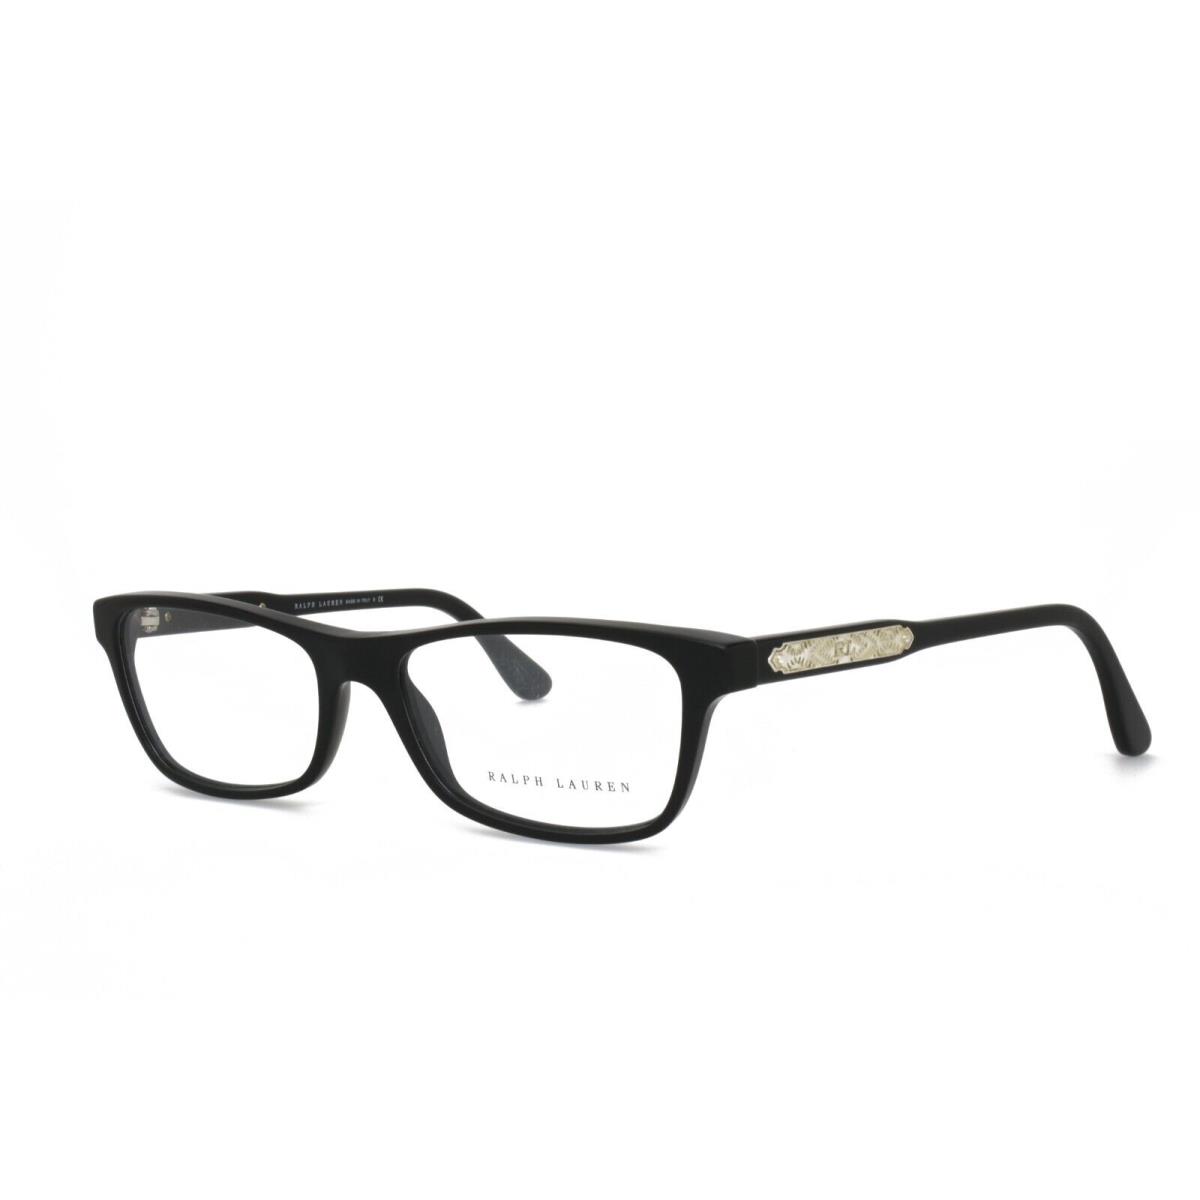 Ralph Lauren 6115 5001 53-16-140 Black Displayed Eyeglasses Frames